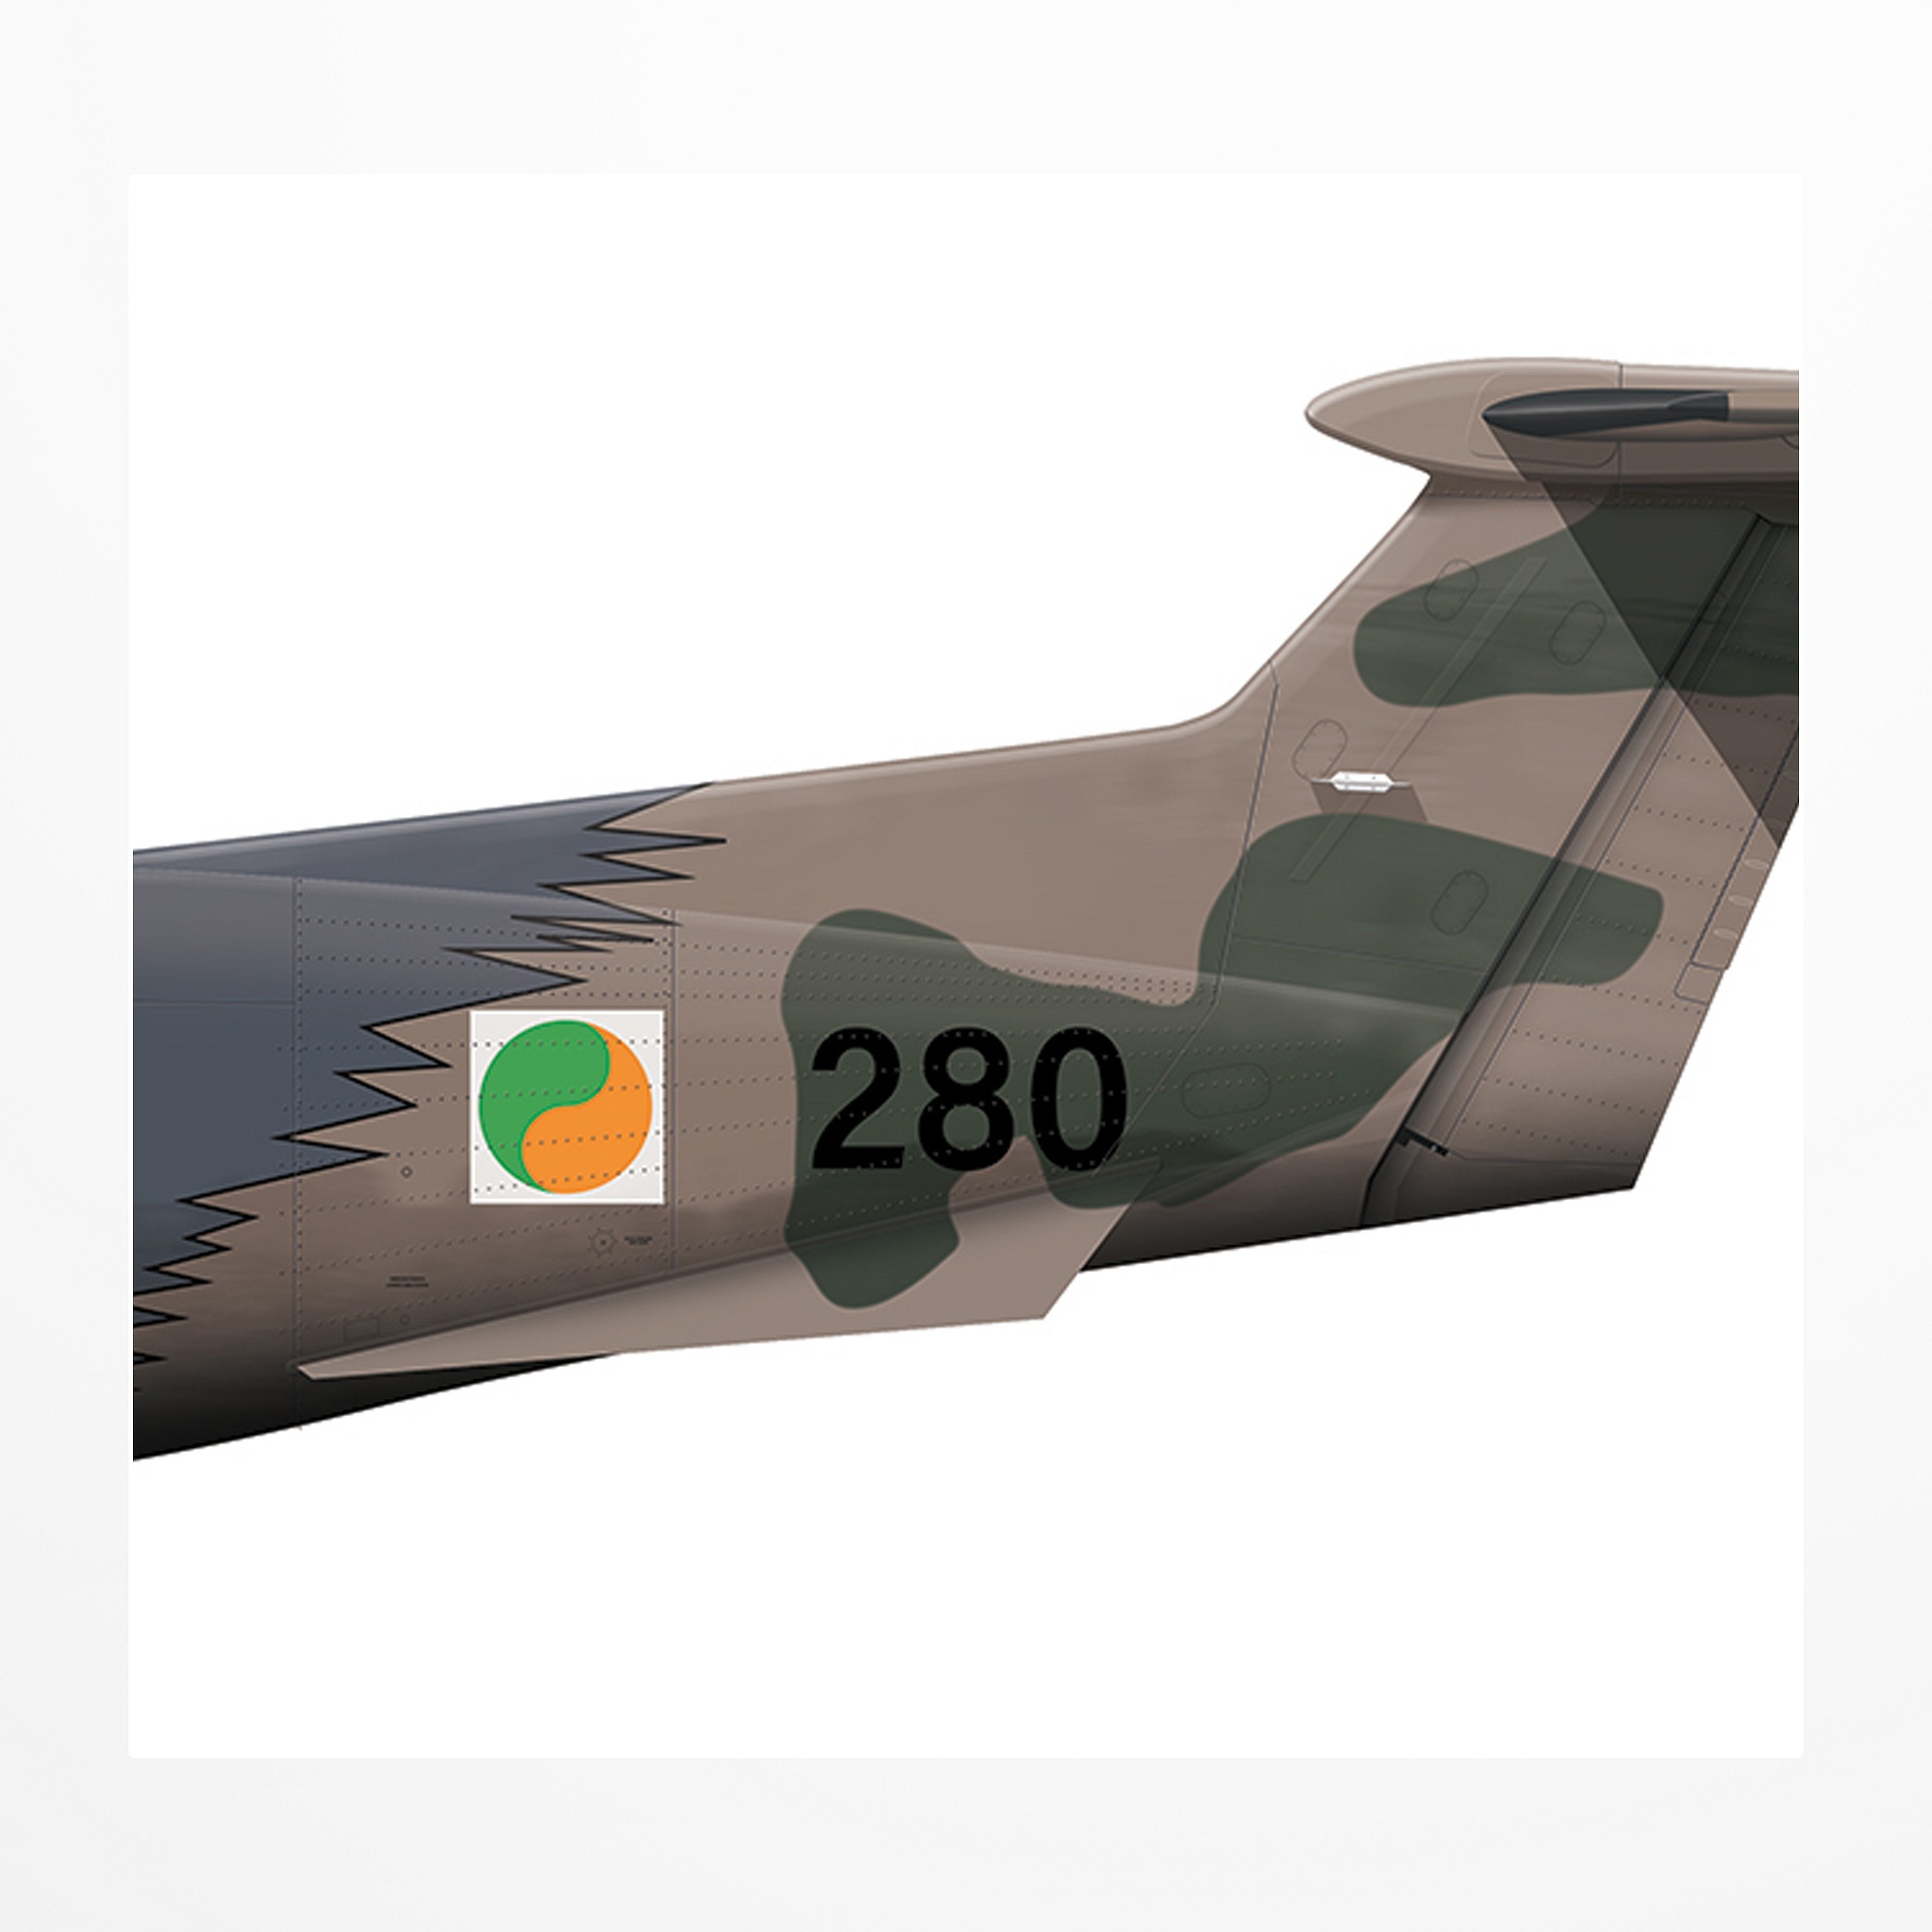 PC-12 NG "280", 100 Year Anniversary, Irish Air Corps